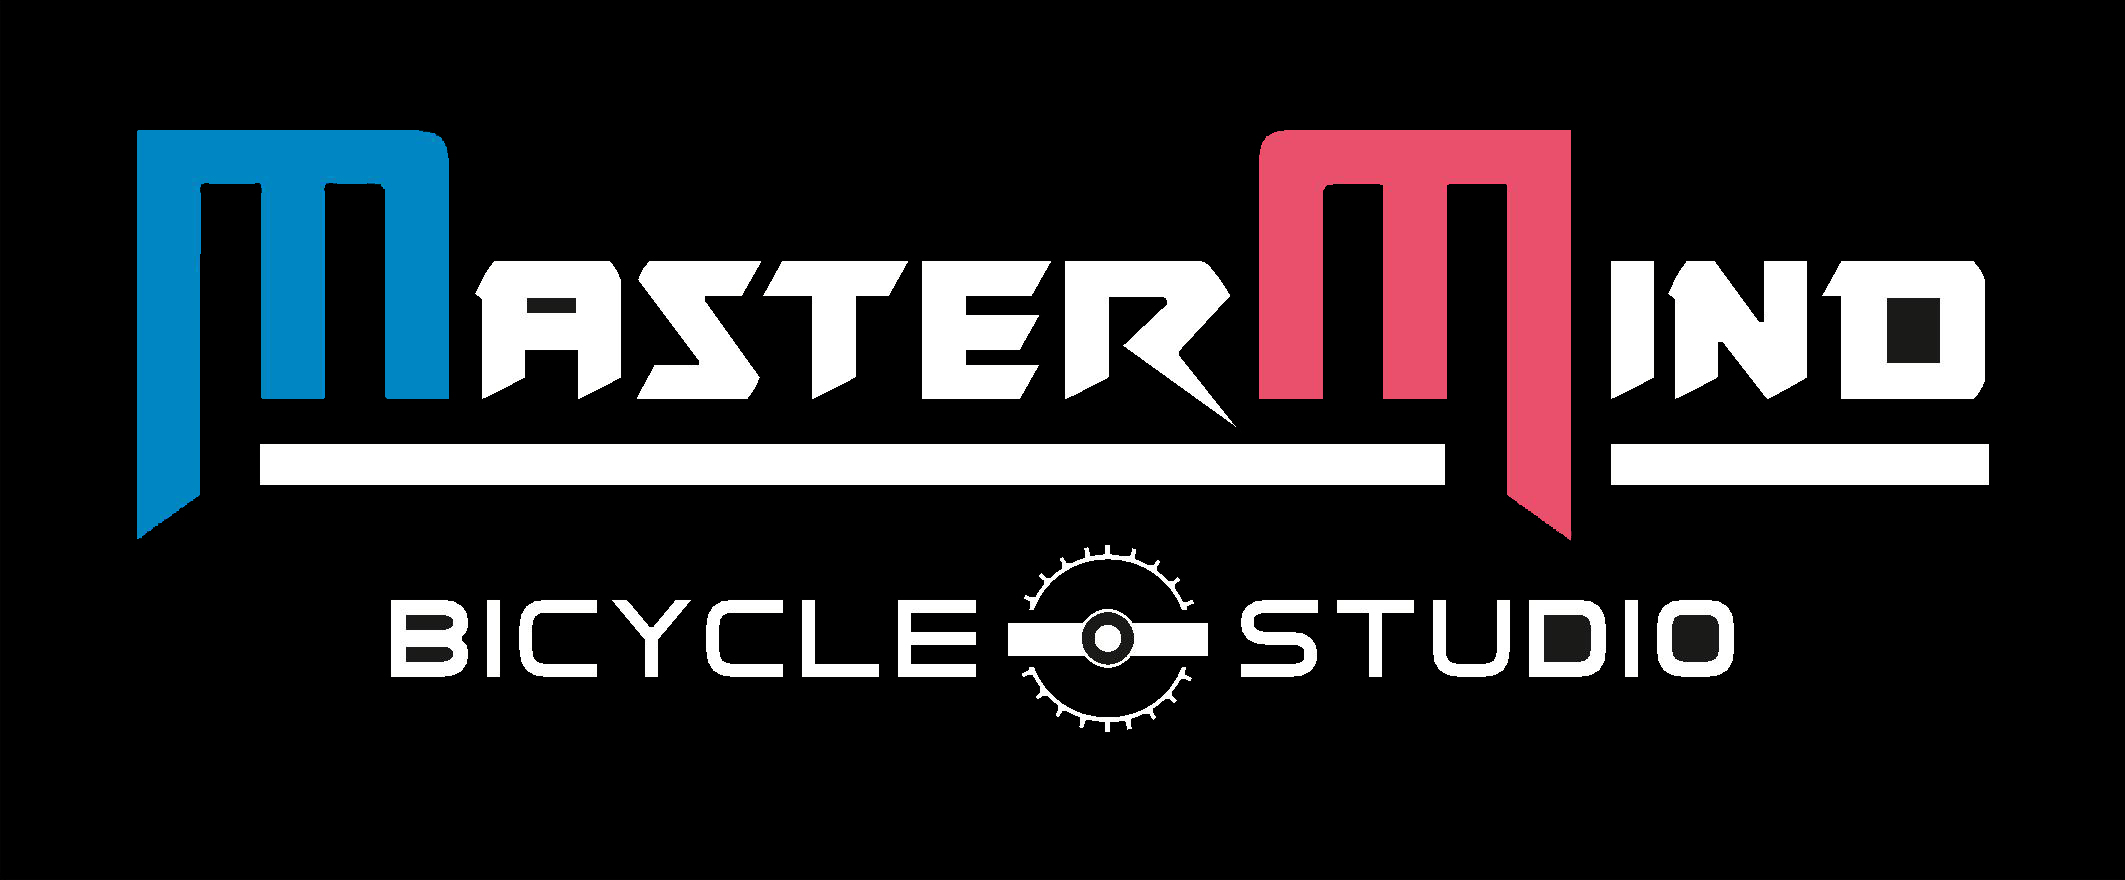 Master mind Bicycle studio - Mumbai